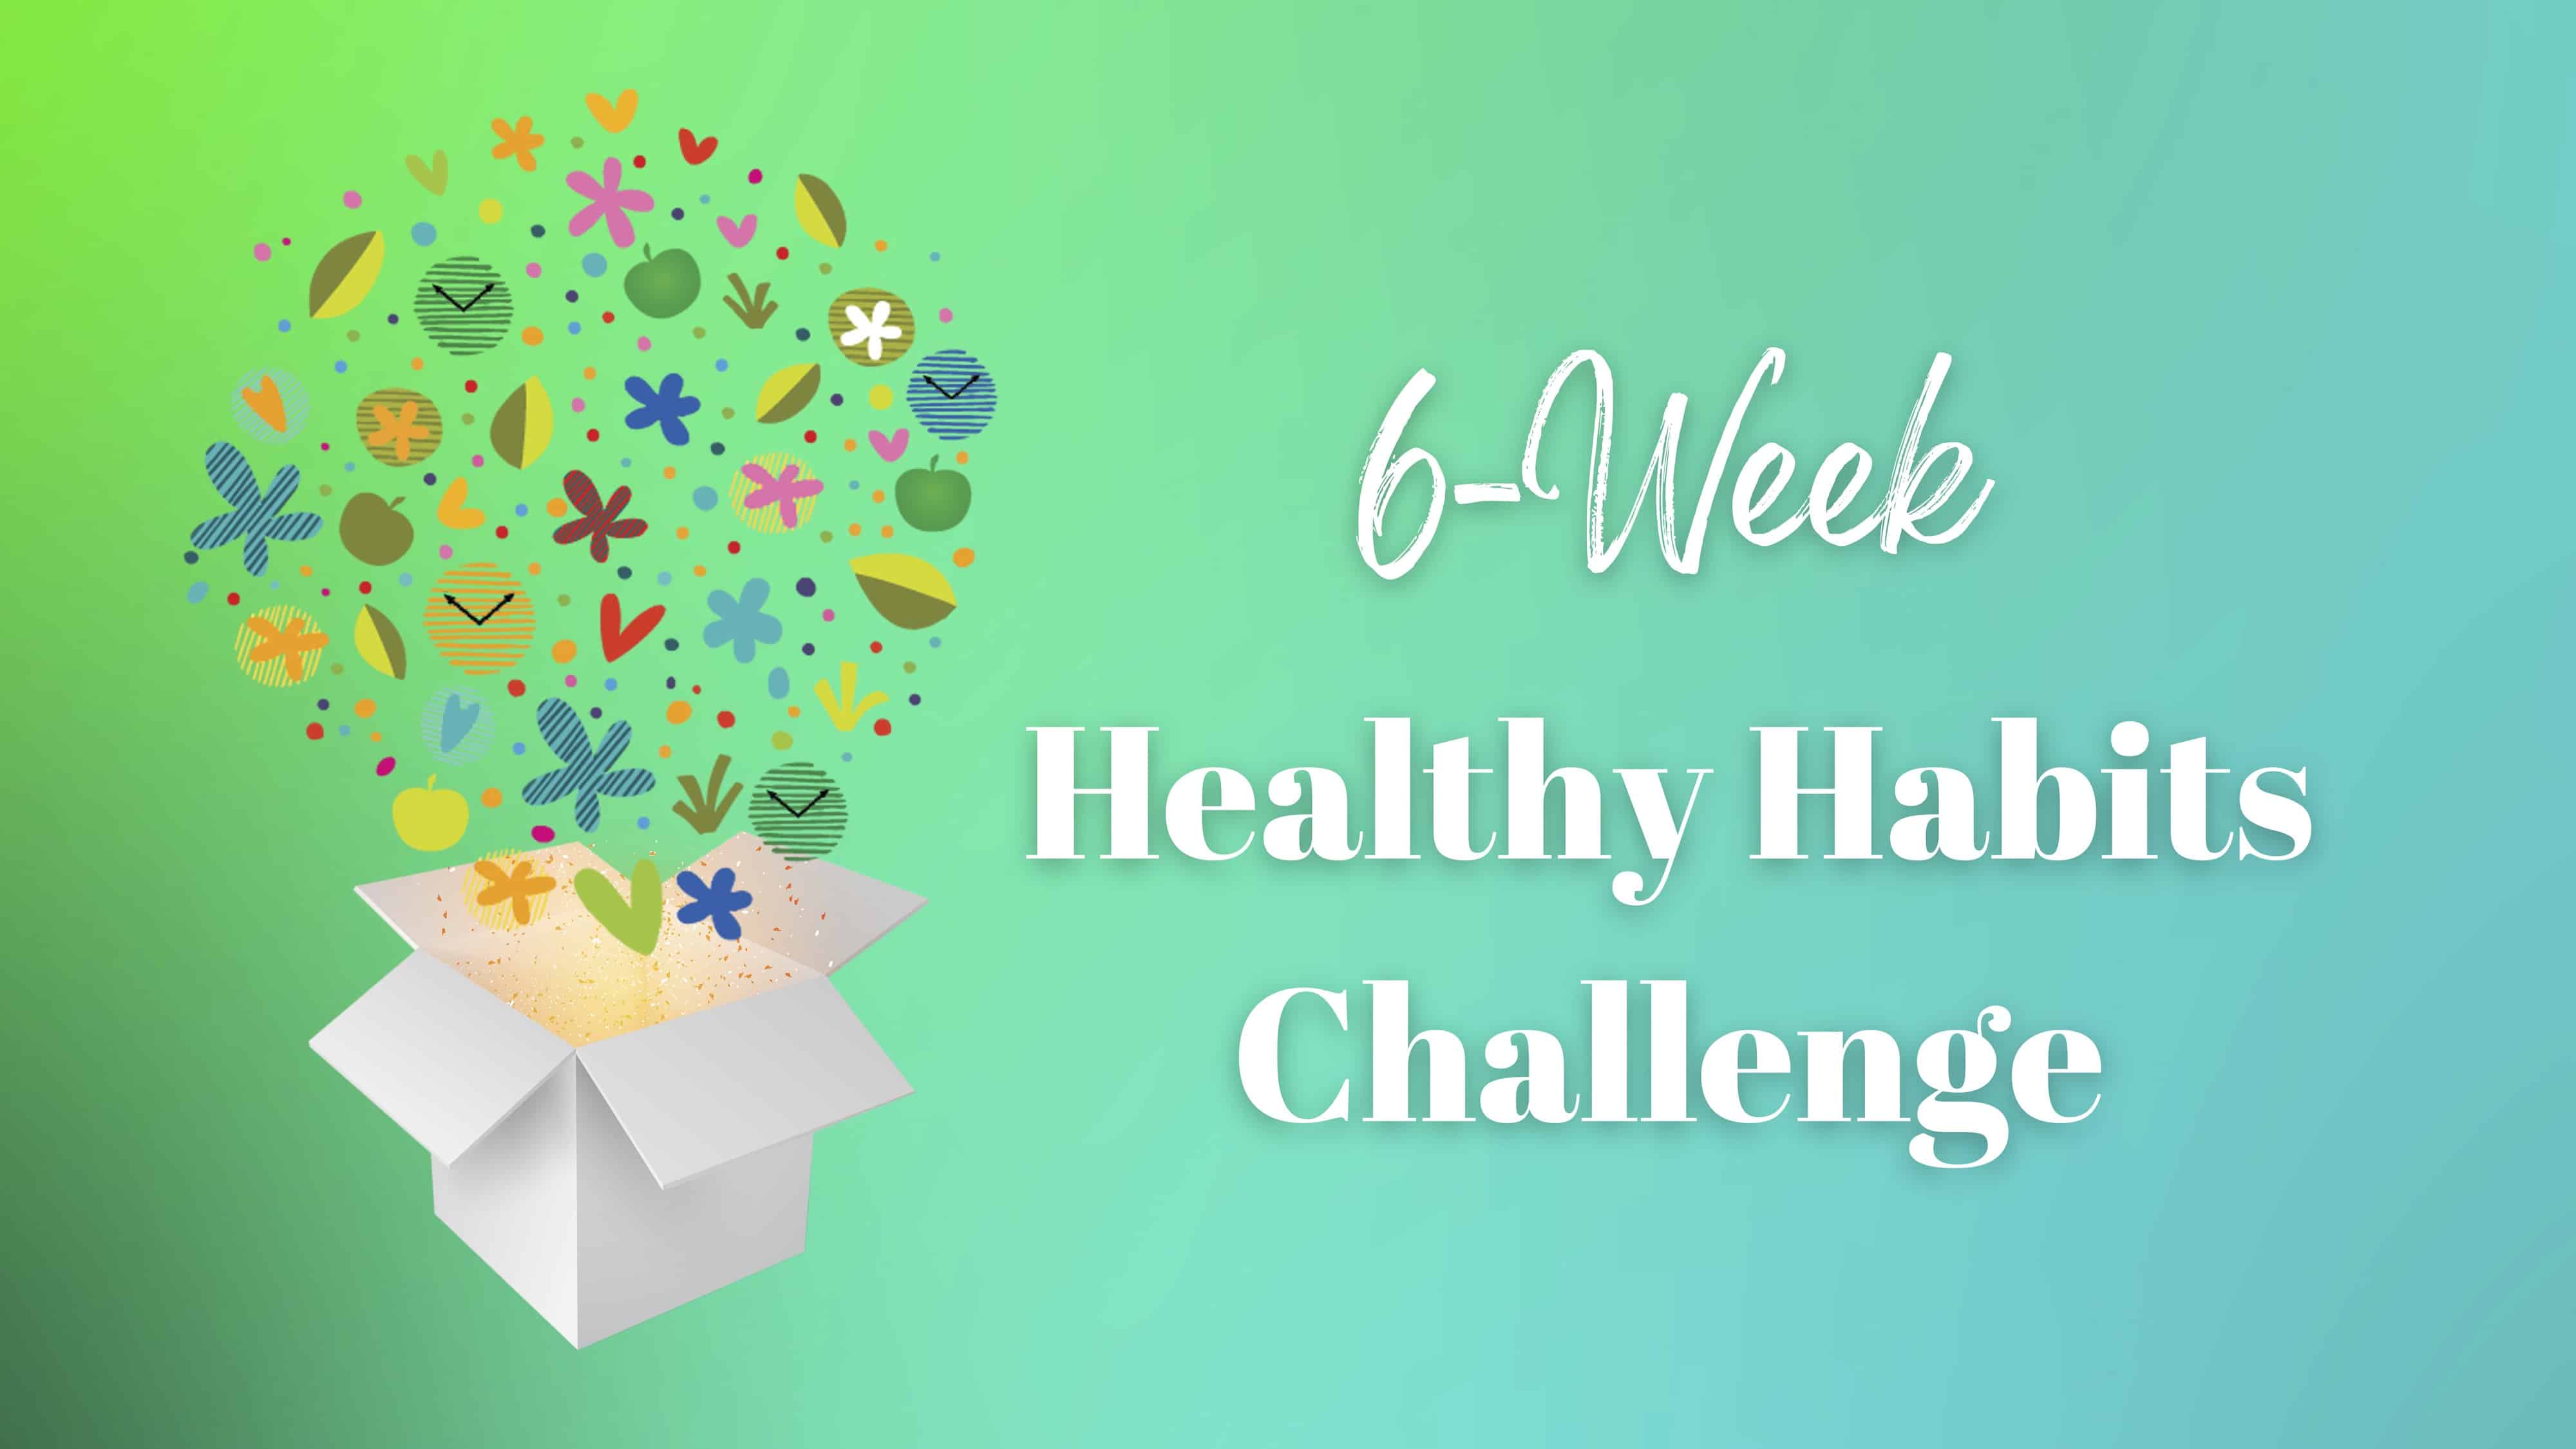 6-Week Healthy Habits Challenge